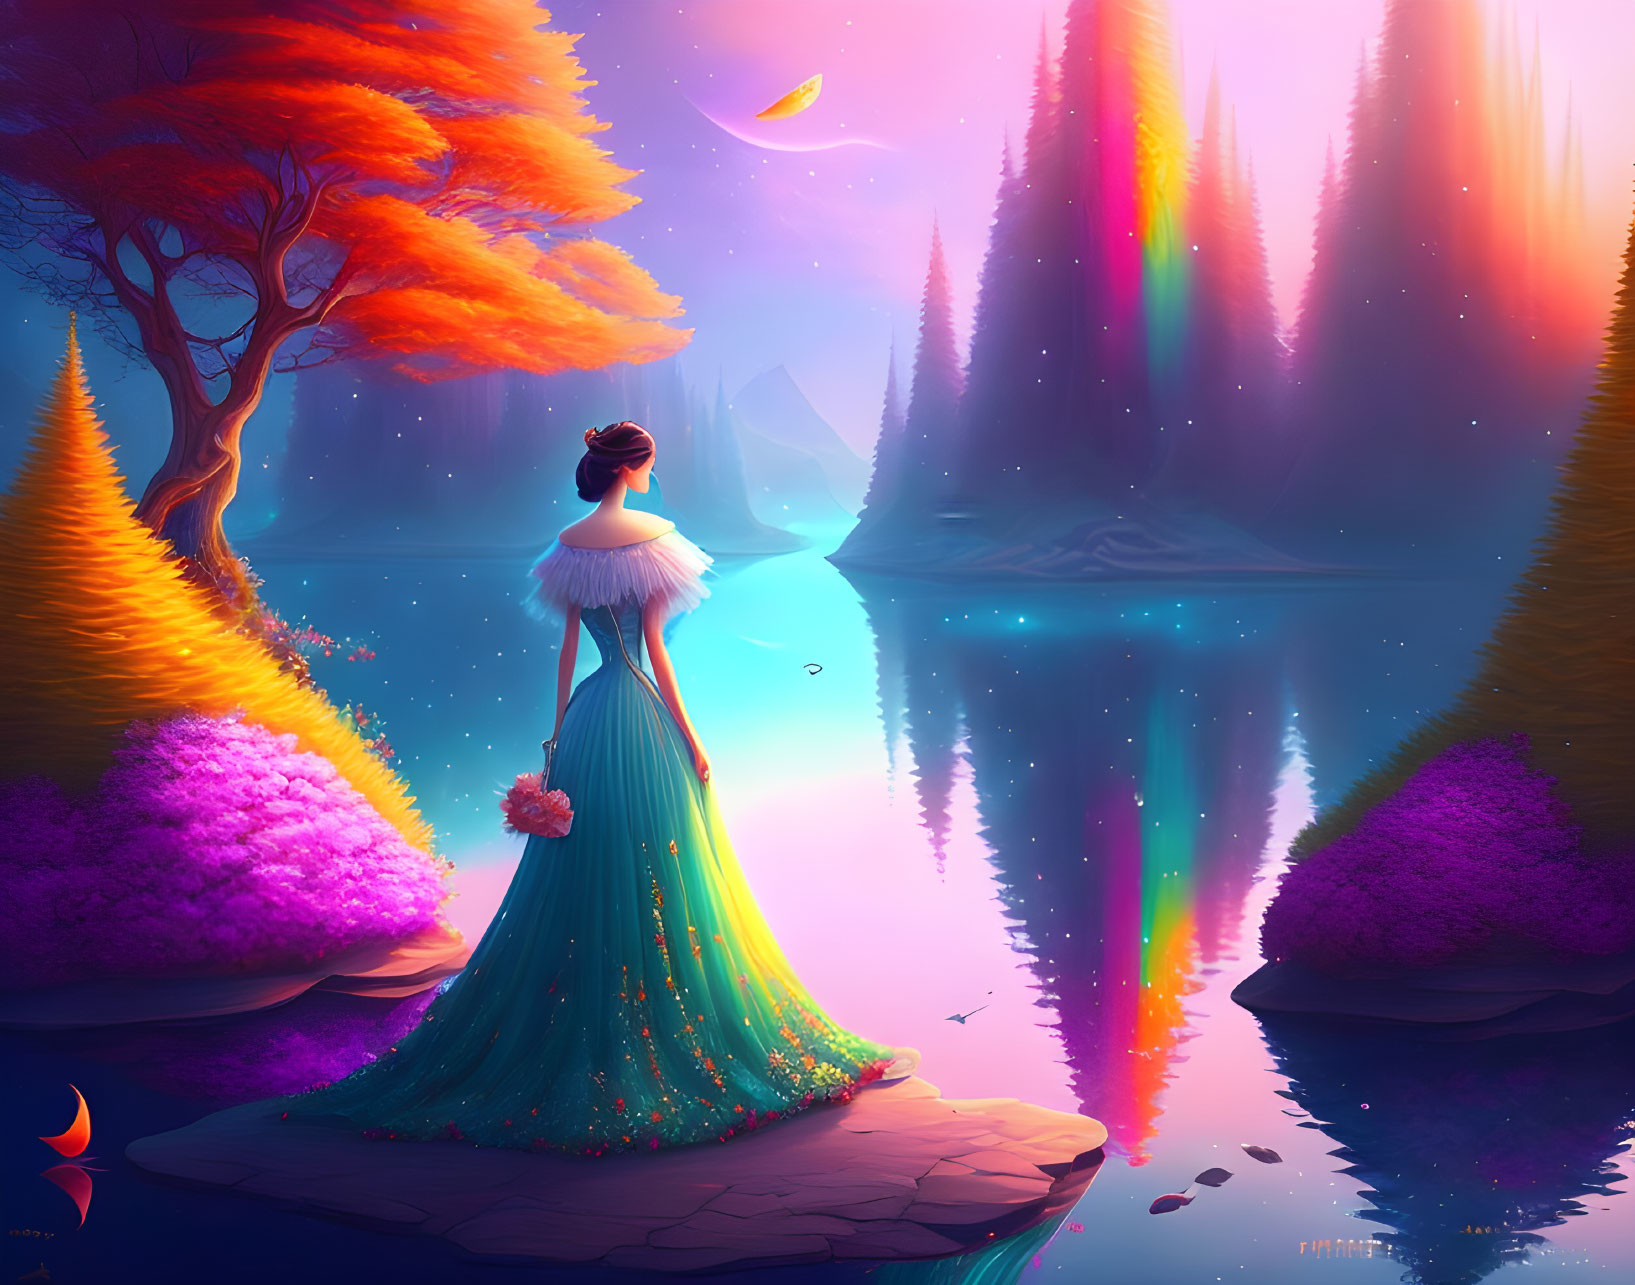 Woman in elegant gown gazes at colorful, fantastical lakeshore landscape